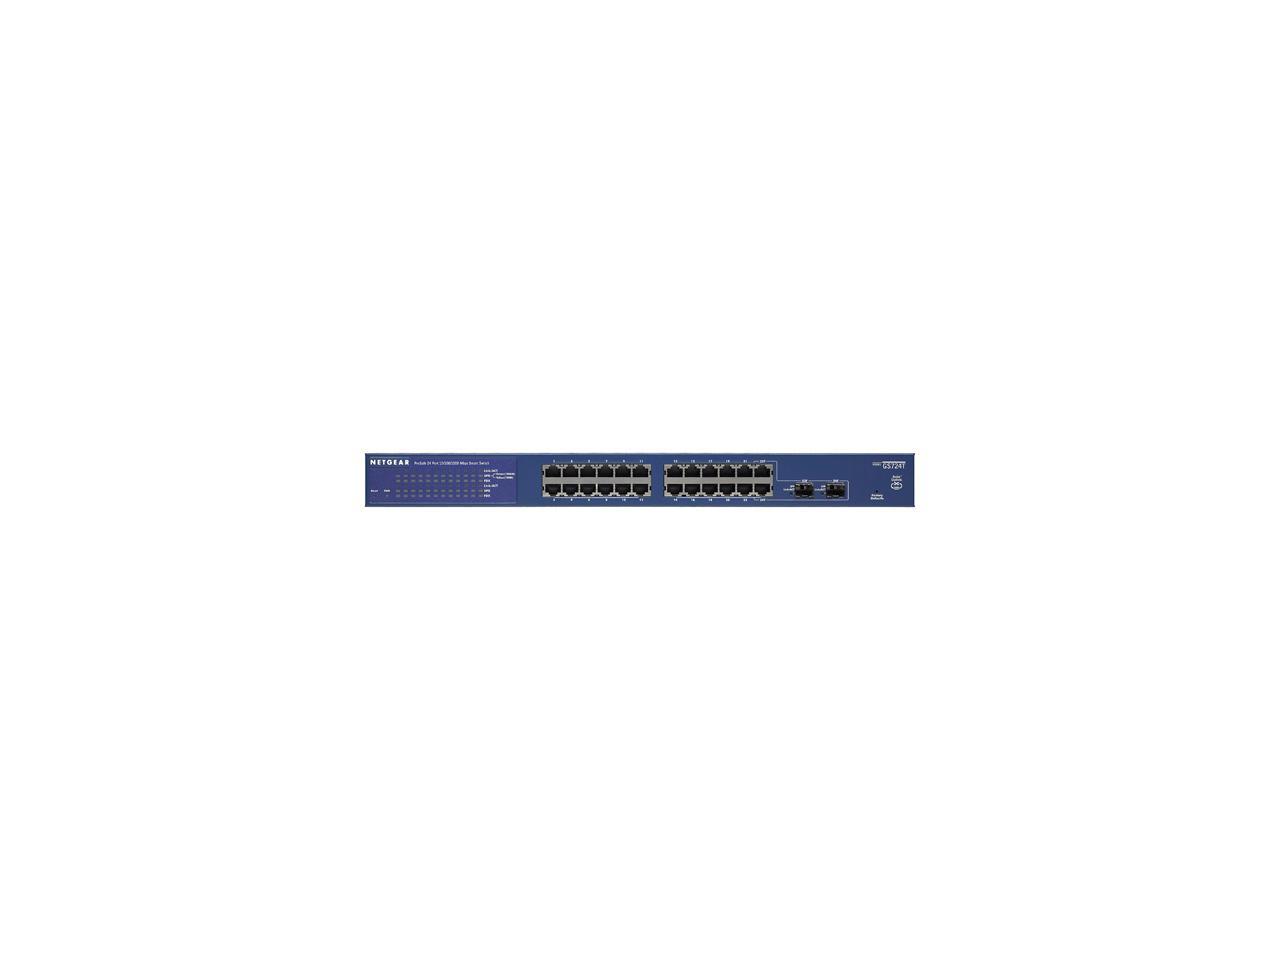 NETGEAR 24-Port Gigabit Ethernet Smart Switch (GS724Tv4) - Managed with 2 x 1G SFP, Desktop/Rackmount, and ProSAFE Limited Lifetime Protection